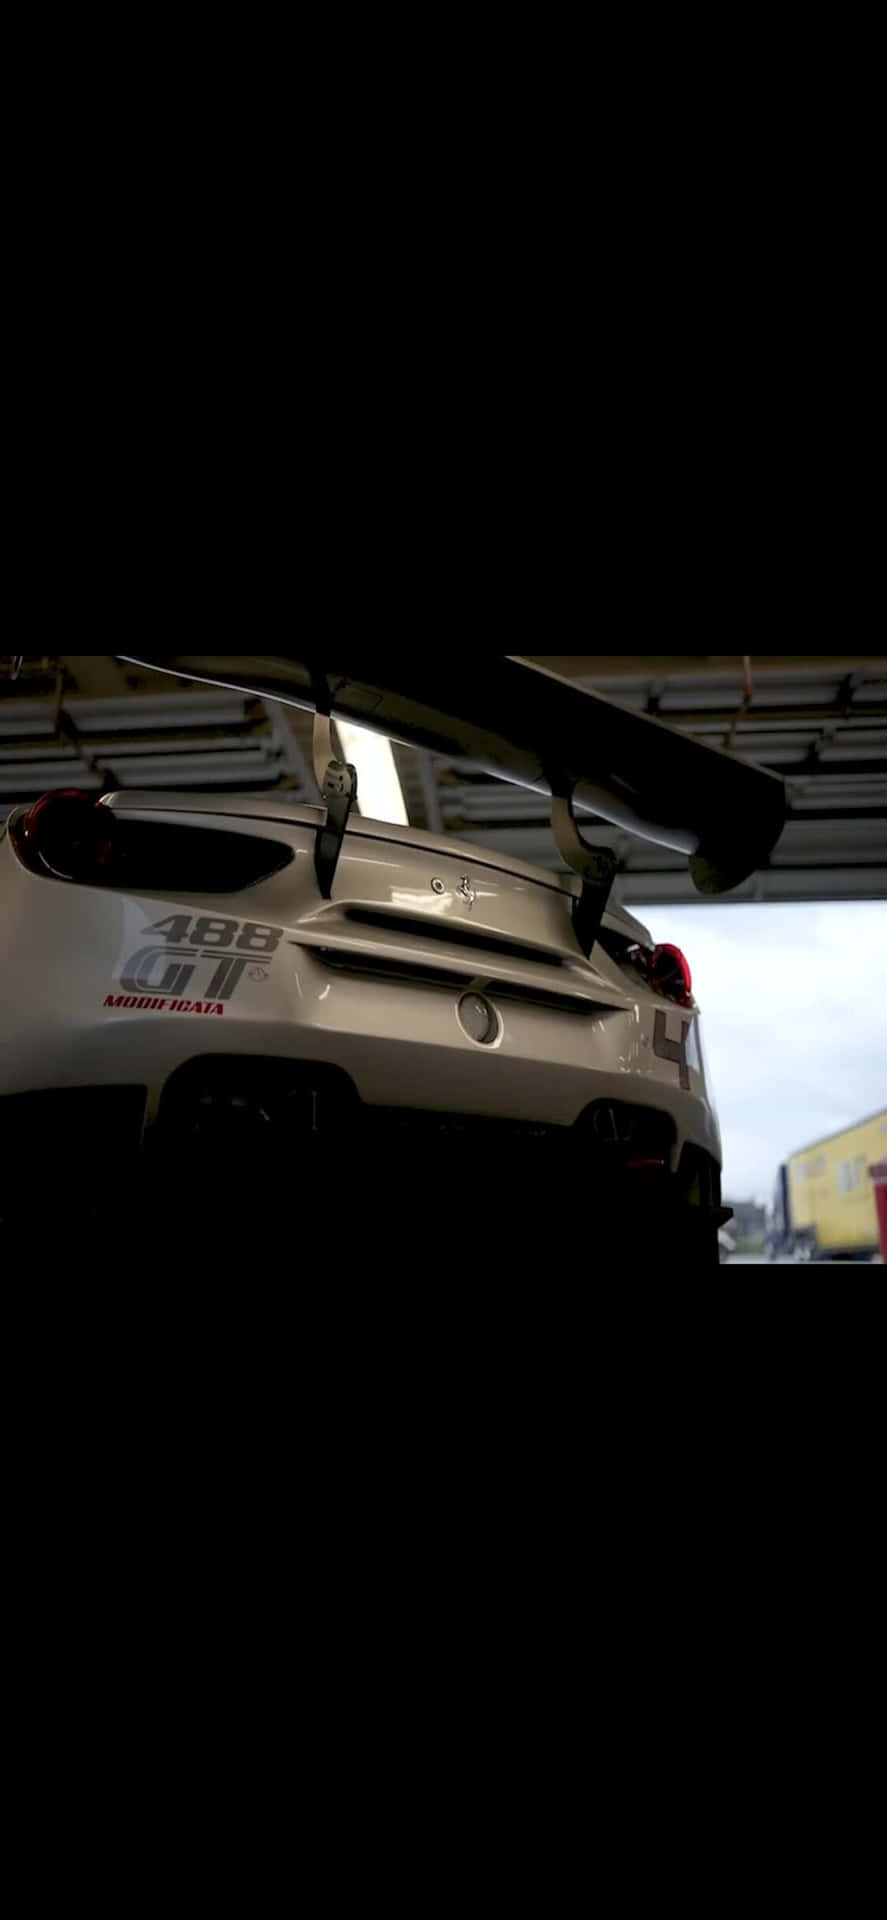 Iphone X Forza Motorsport 7 Bakgrund